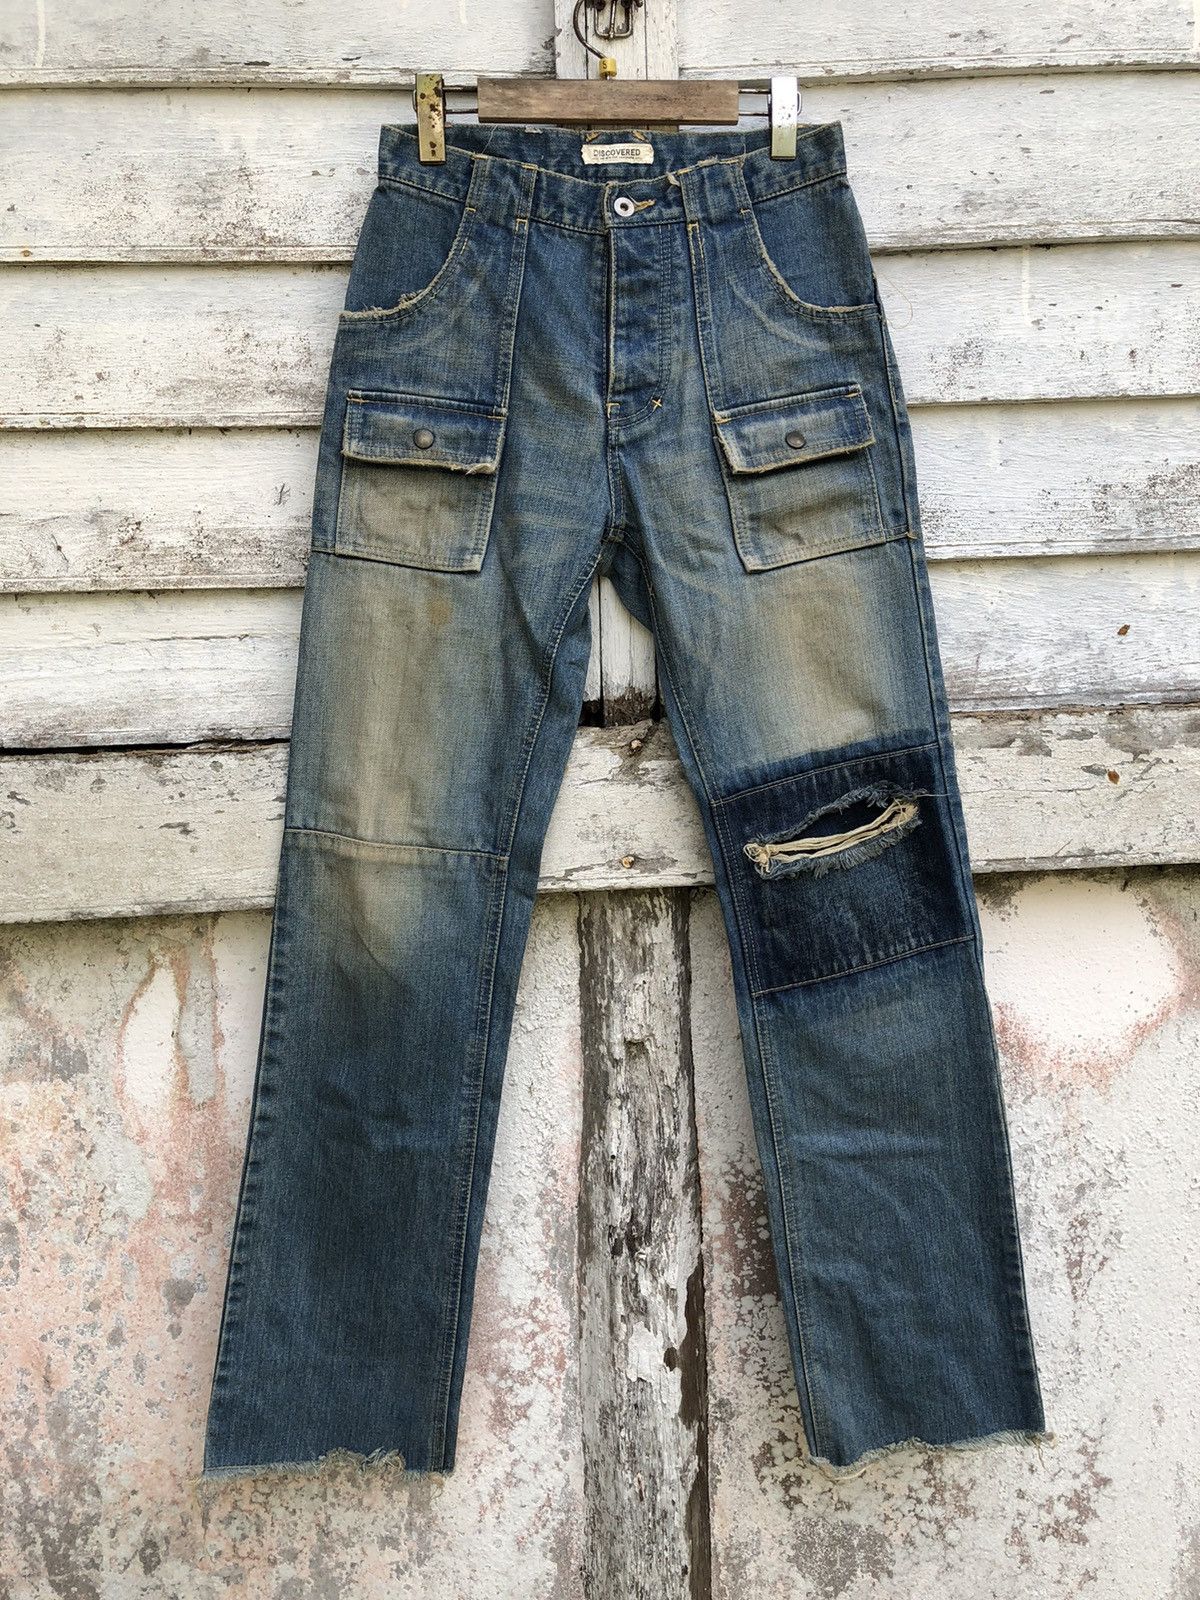 💯Felir💯Discovered Distressed Bush Pocket Pant Jean - 1